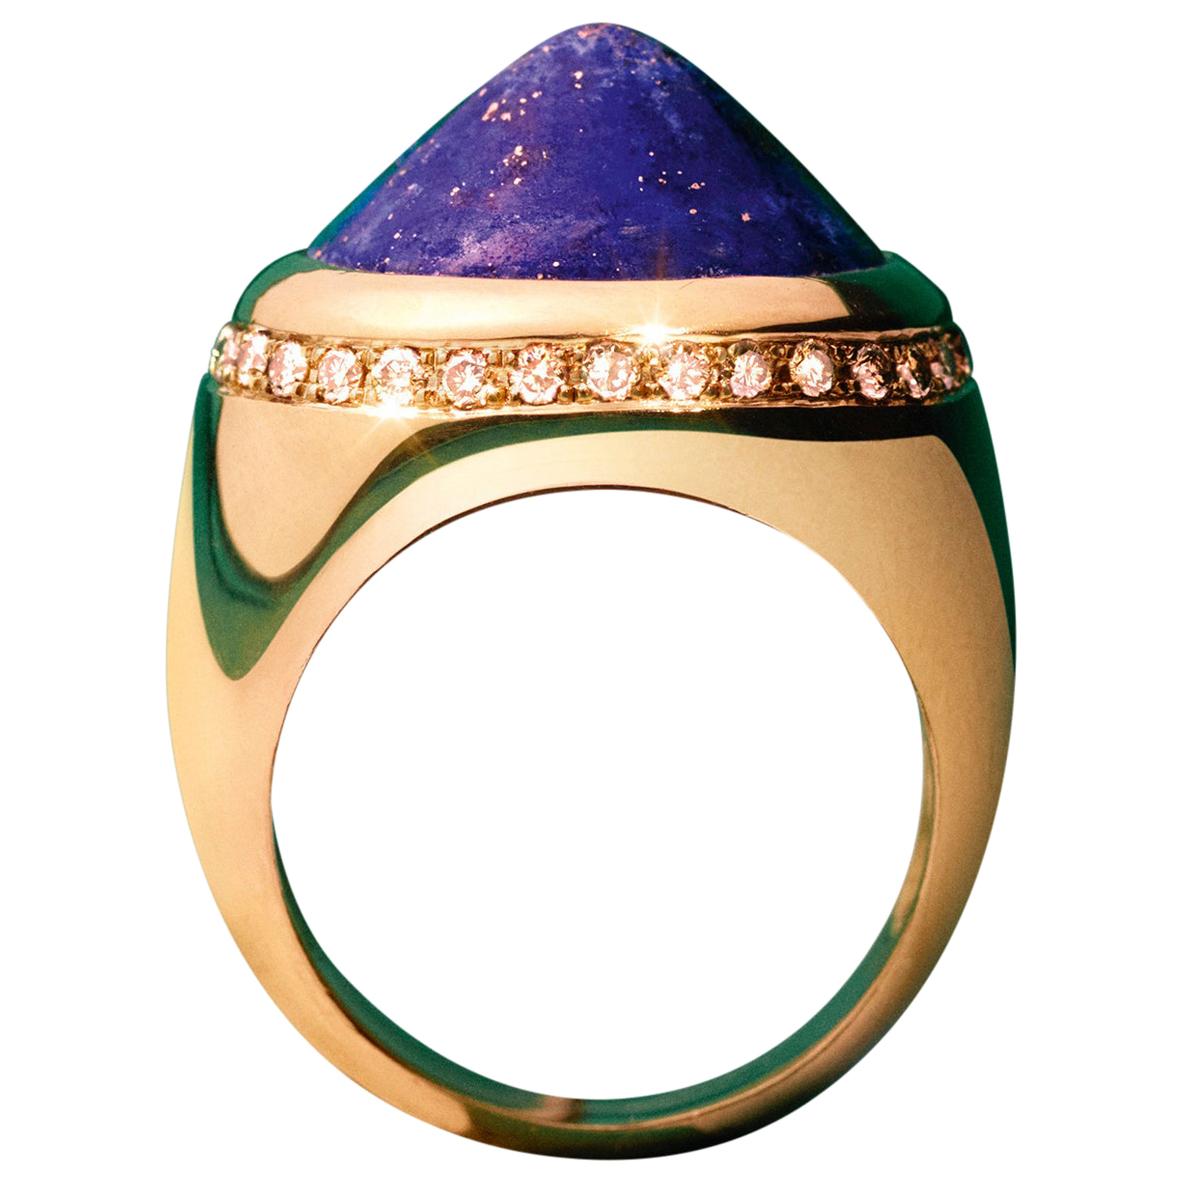 Chevalier, Lapis lazuli and Diamond, signet ring, yellow gold 18k, cabochon